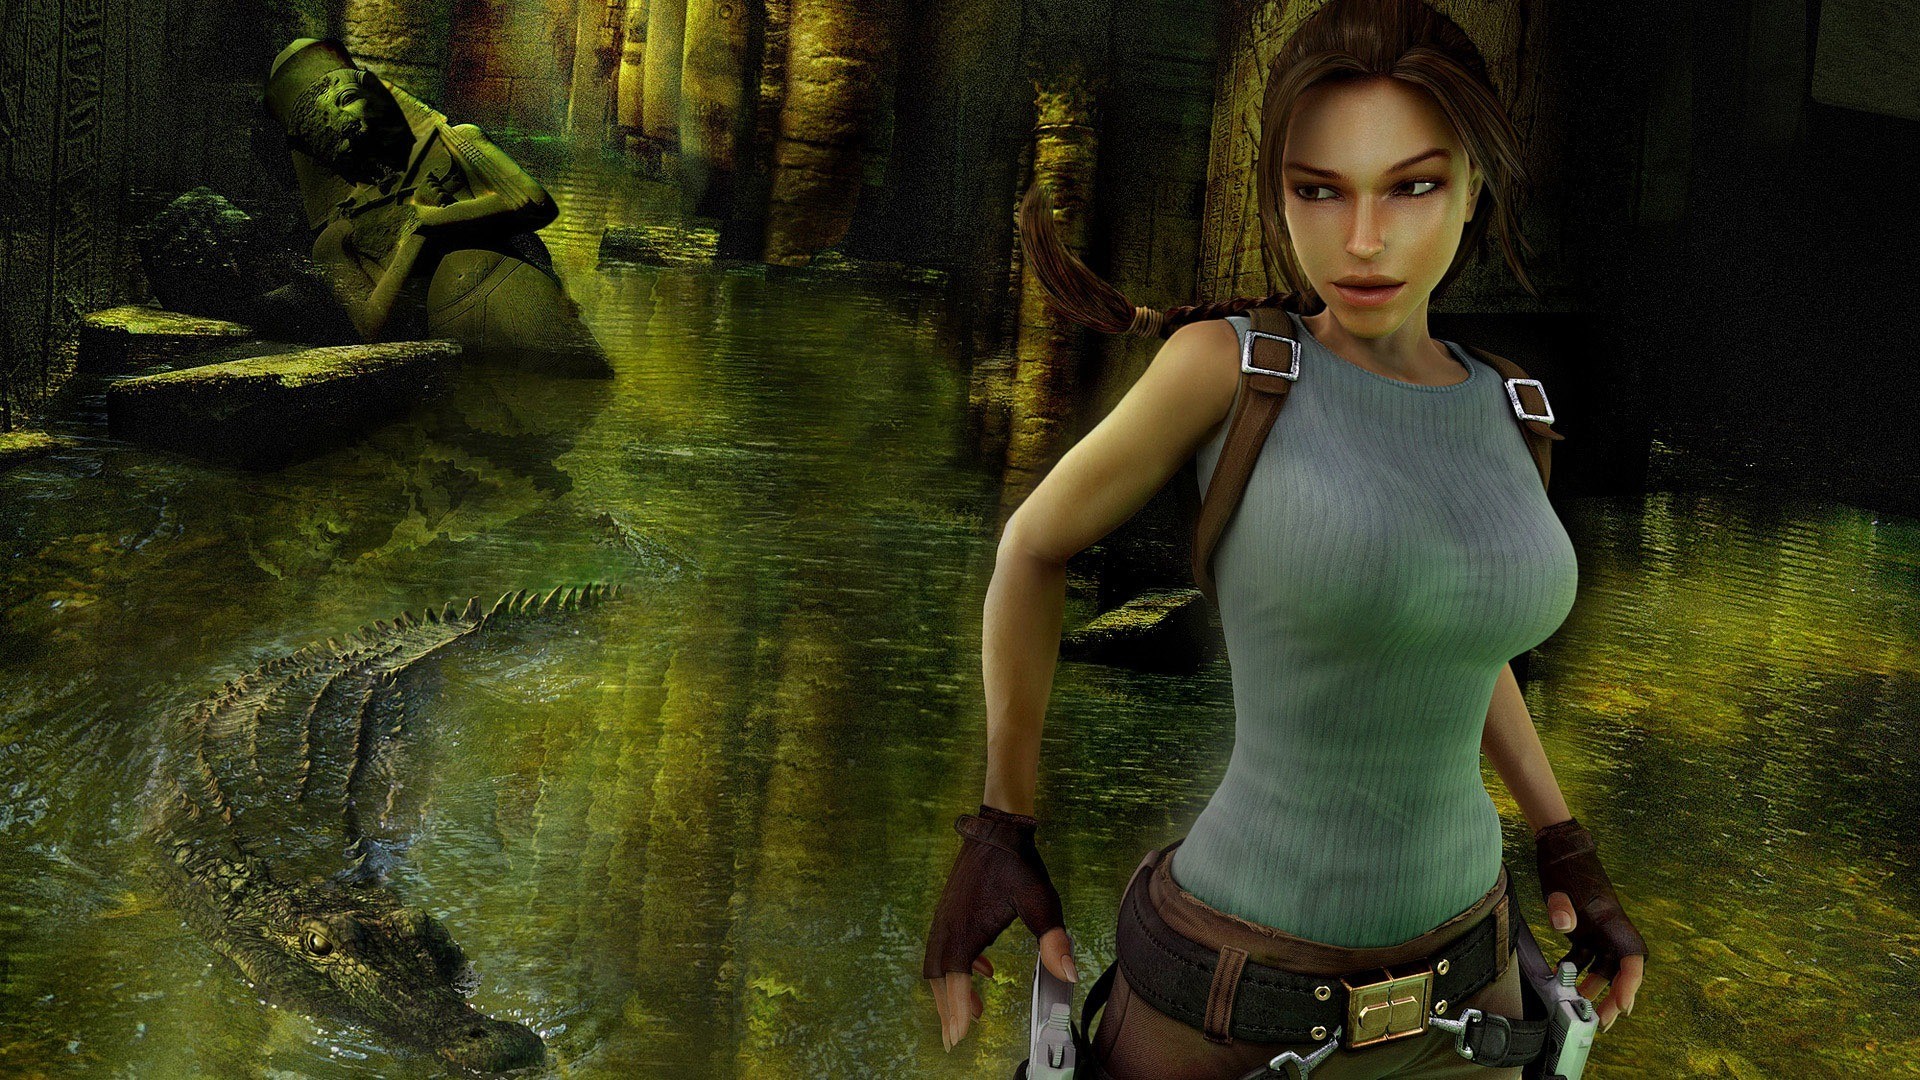 General 1920x1080 Tomb Raider Tomb Raider: Anniversary boobs big boobs video game girls video games brunette Lara Croft (Tomb Raider) video game characters PC gaming